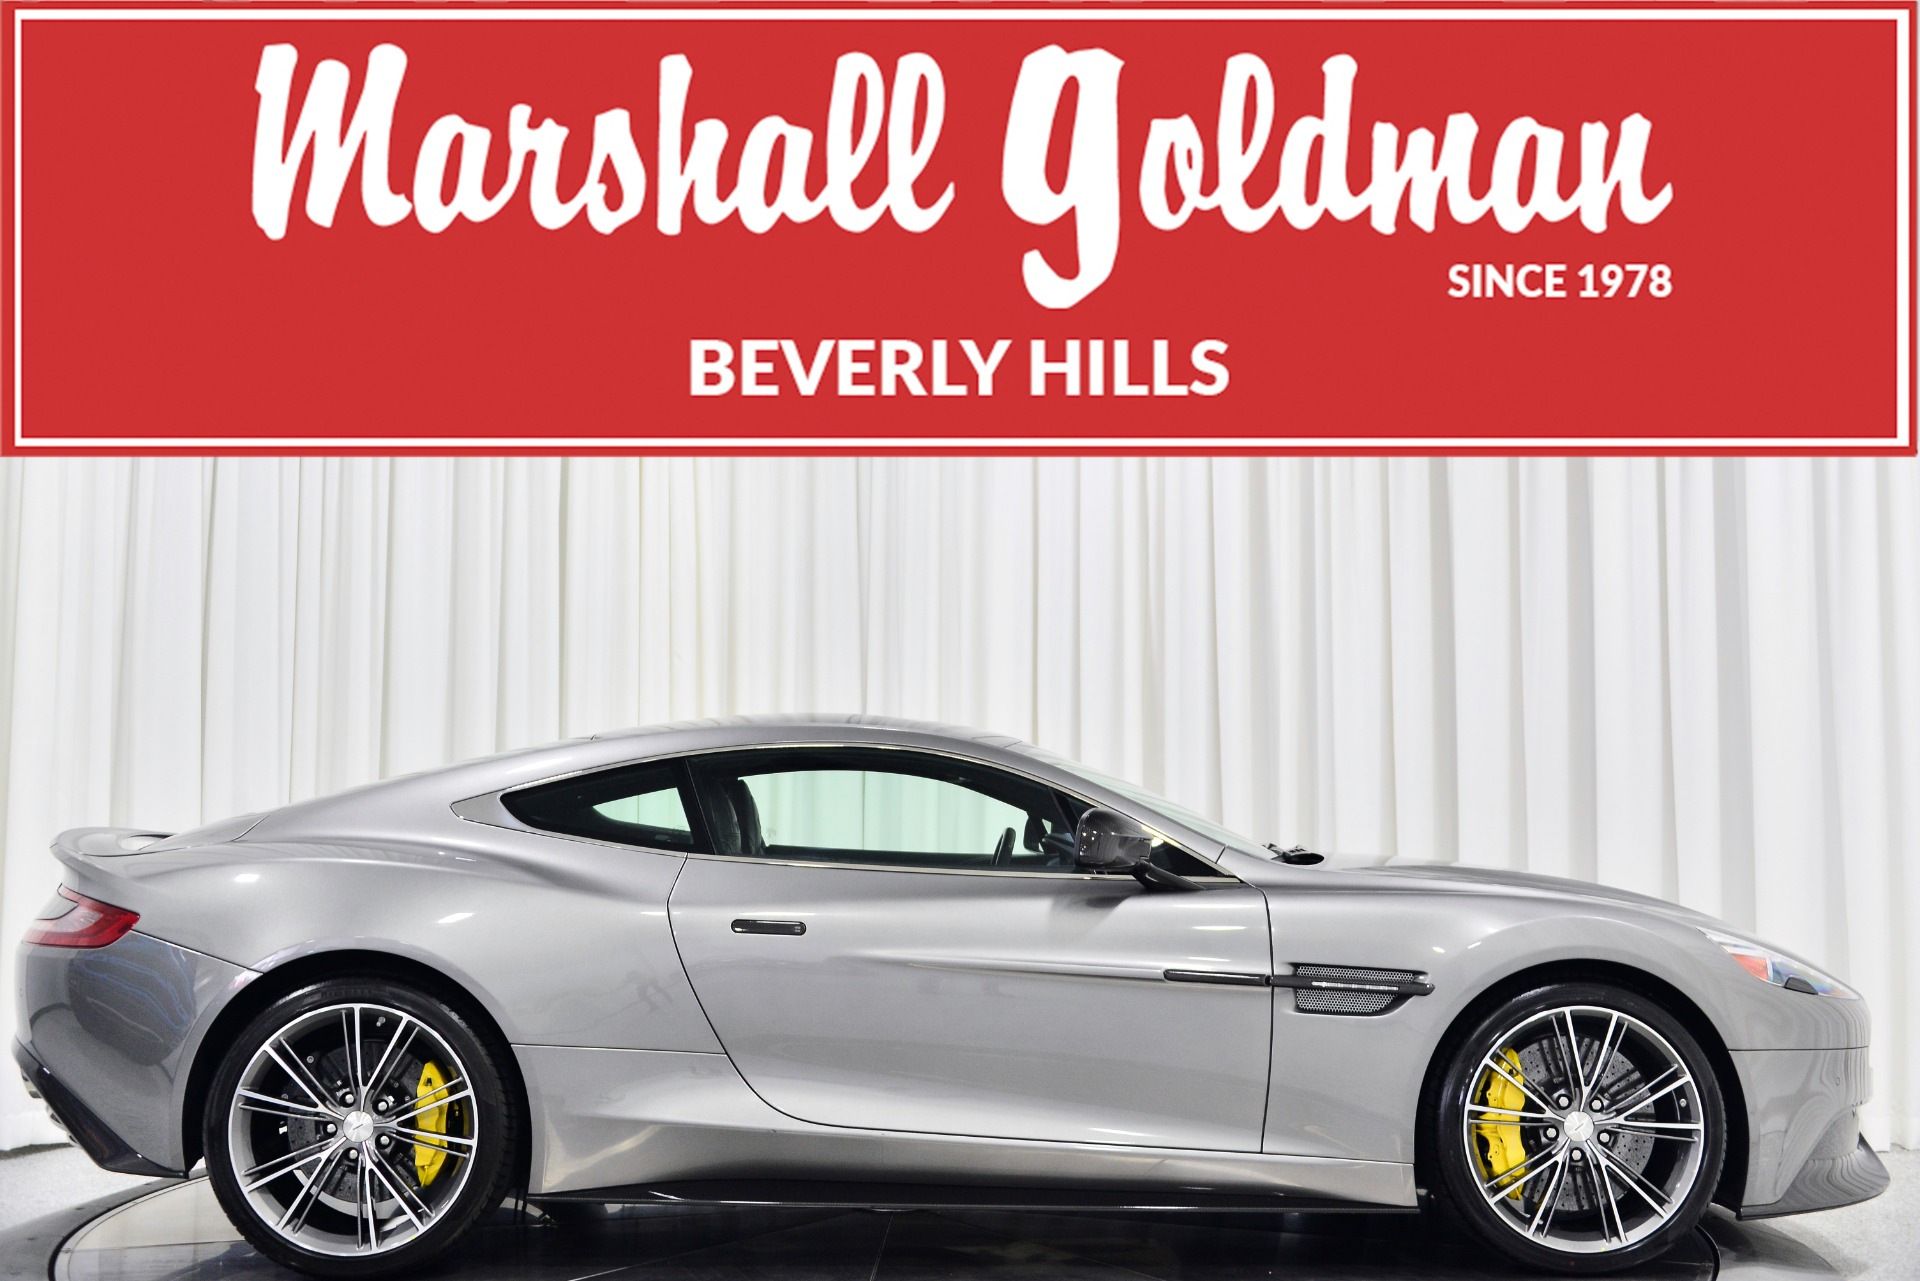 Used 2015 Aston Martin Vanquish For Sale Sold Marshall Goldman Motor Sales Stock Bamv